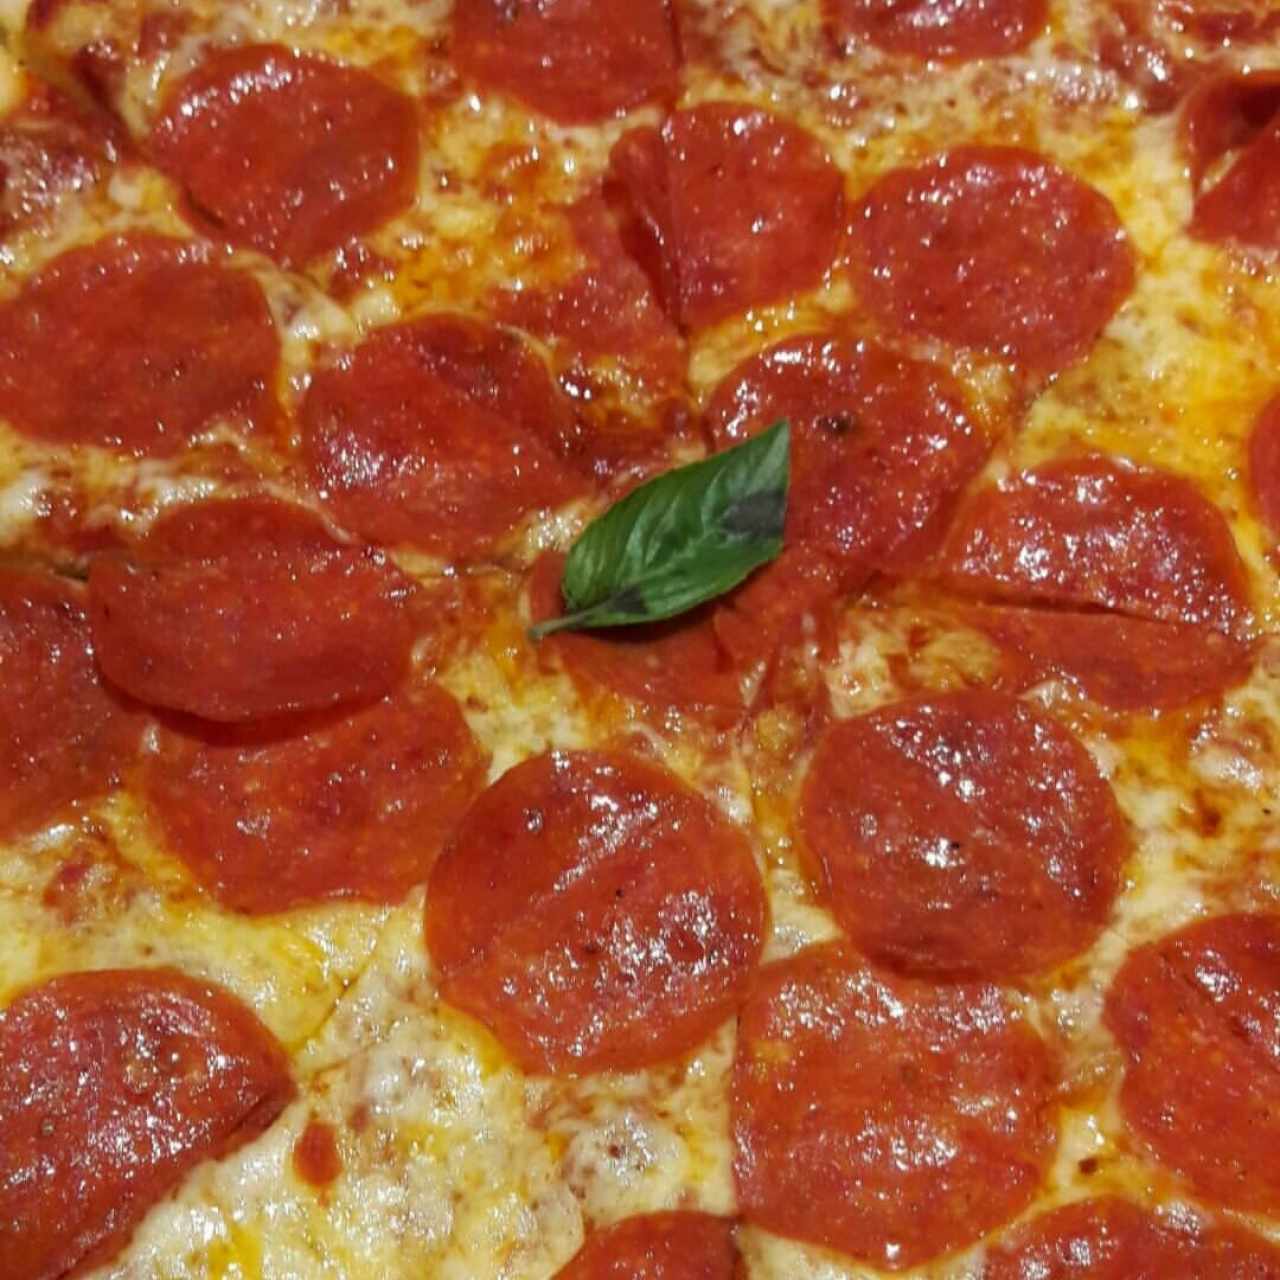 Pizza de pepperoni 